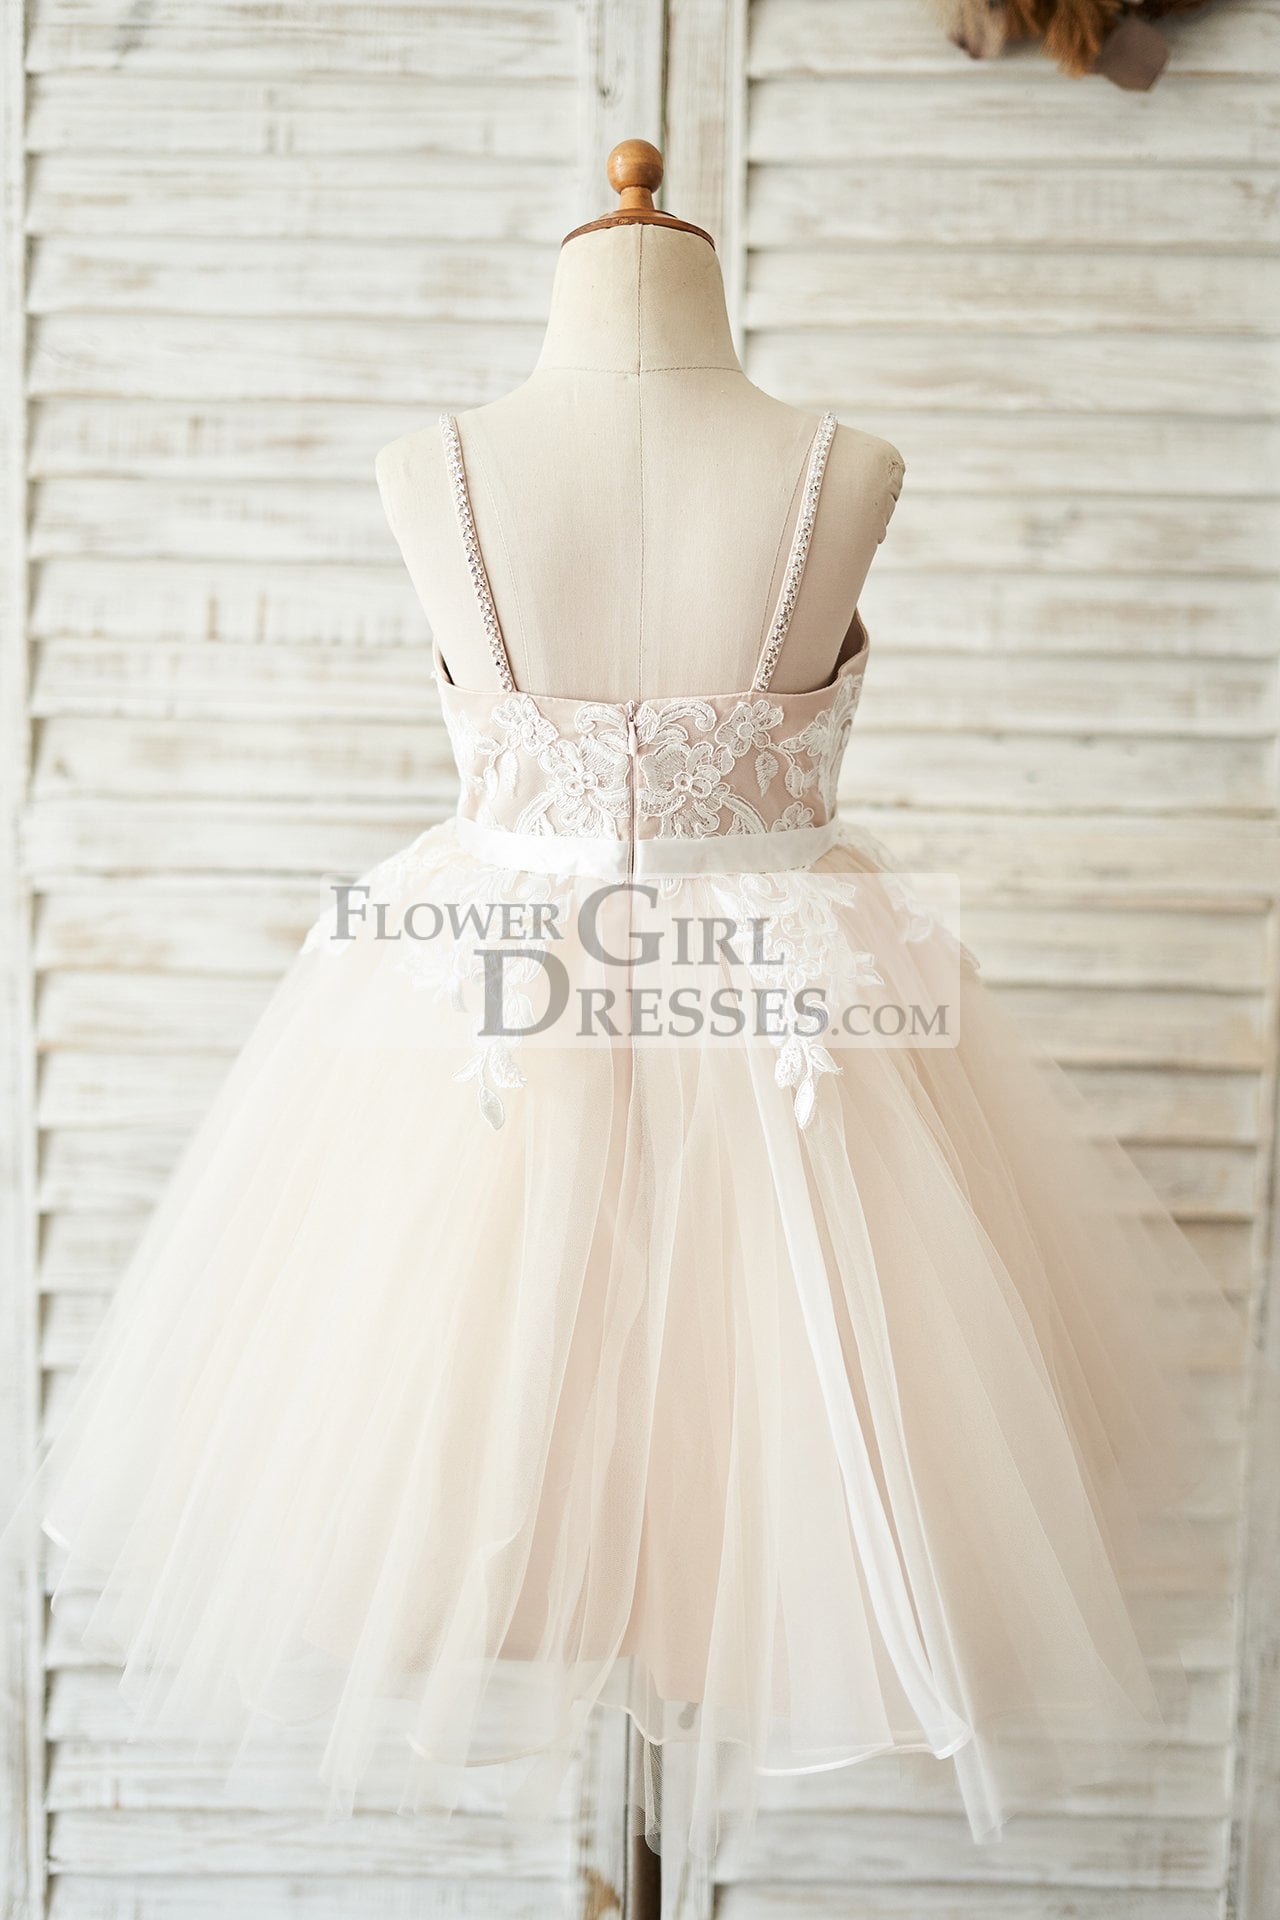 Spaghetti straps Ivory lace Peach Pink Tulle V Neck Wedding Flower Girl Dress